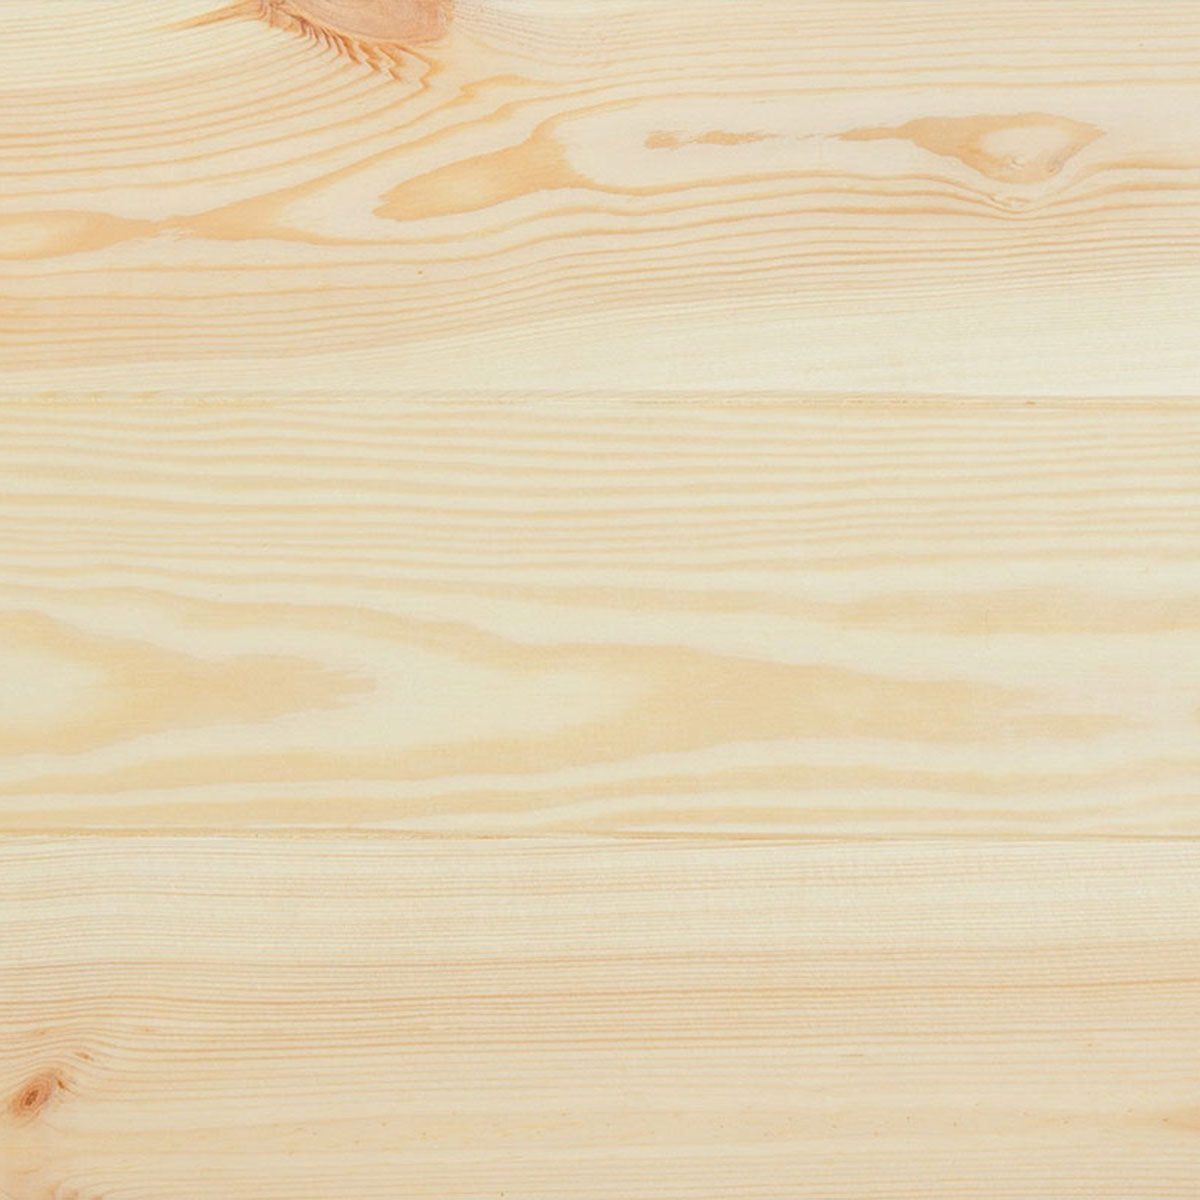 Good Wood Rectangle Board Pine 14x6x.75 inch